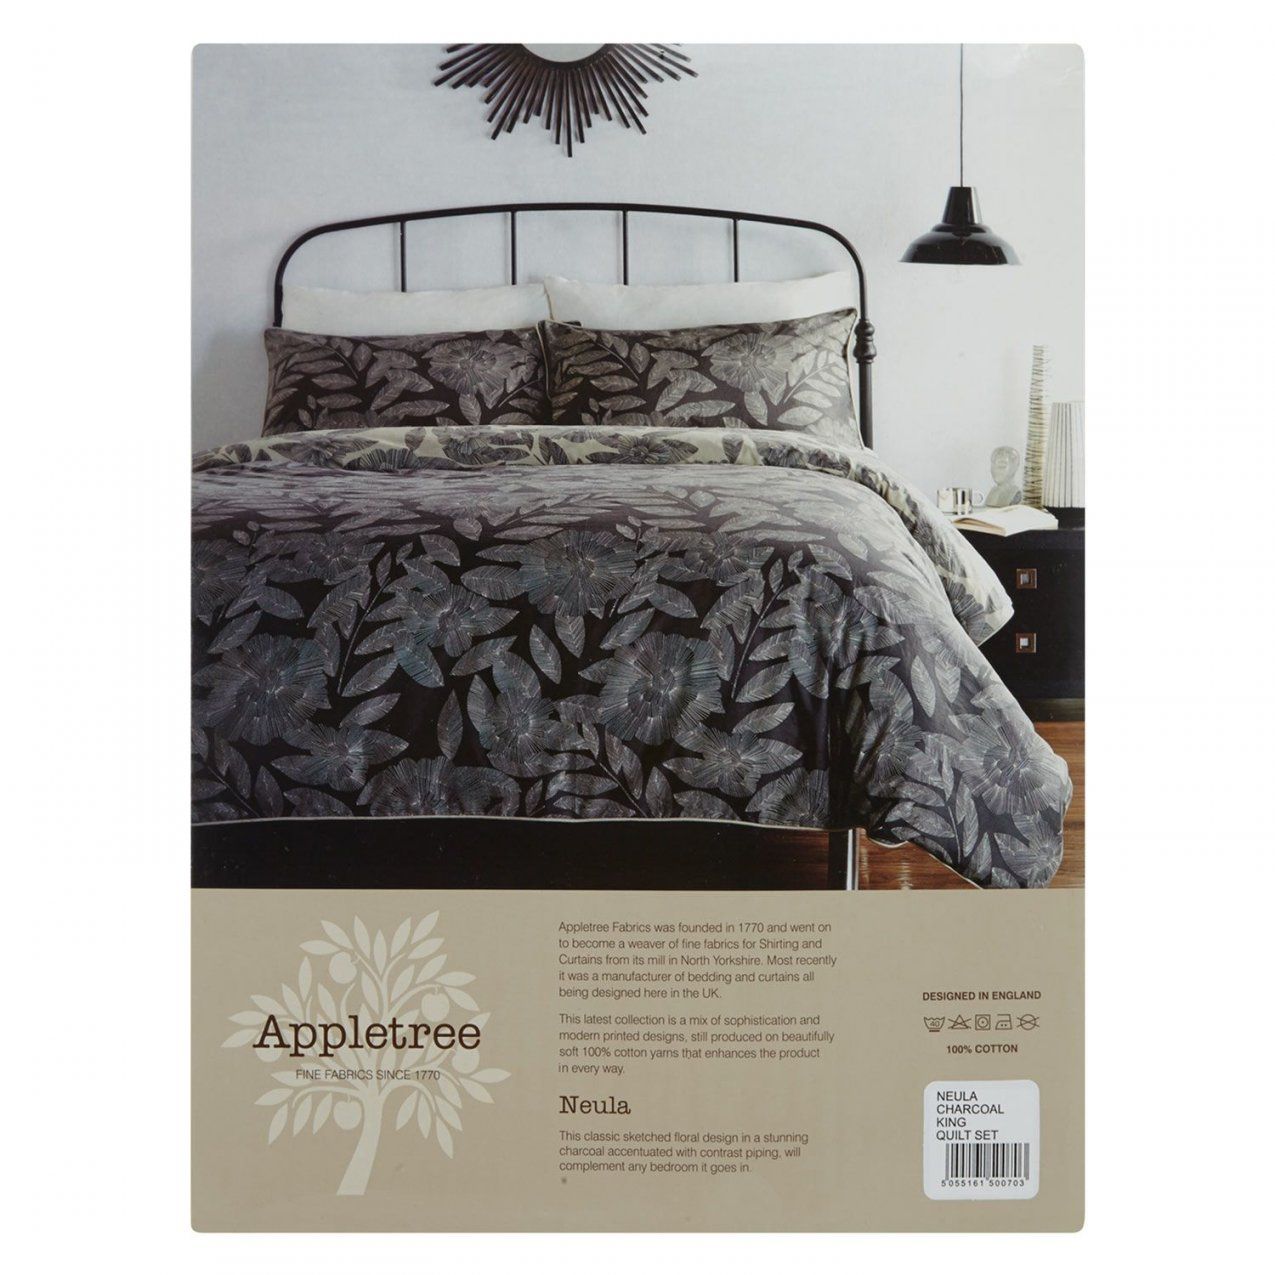 Appletree&quot; King Charcoal Duvet Cover Set  Tk Maxx  Bedroom Ideas von Tk Maxx Bettwäsche Photo